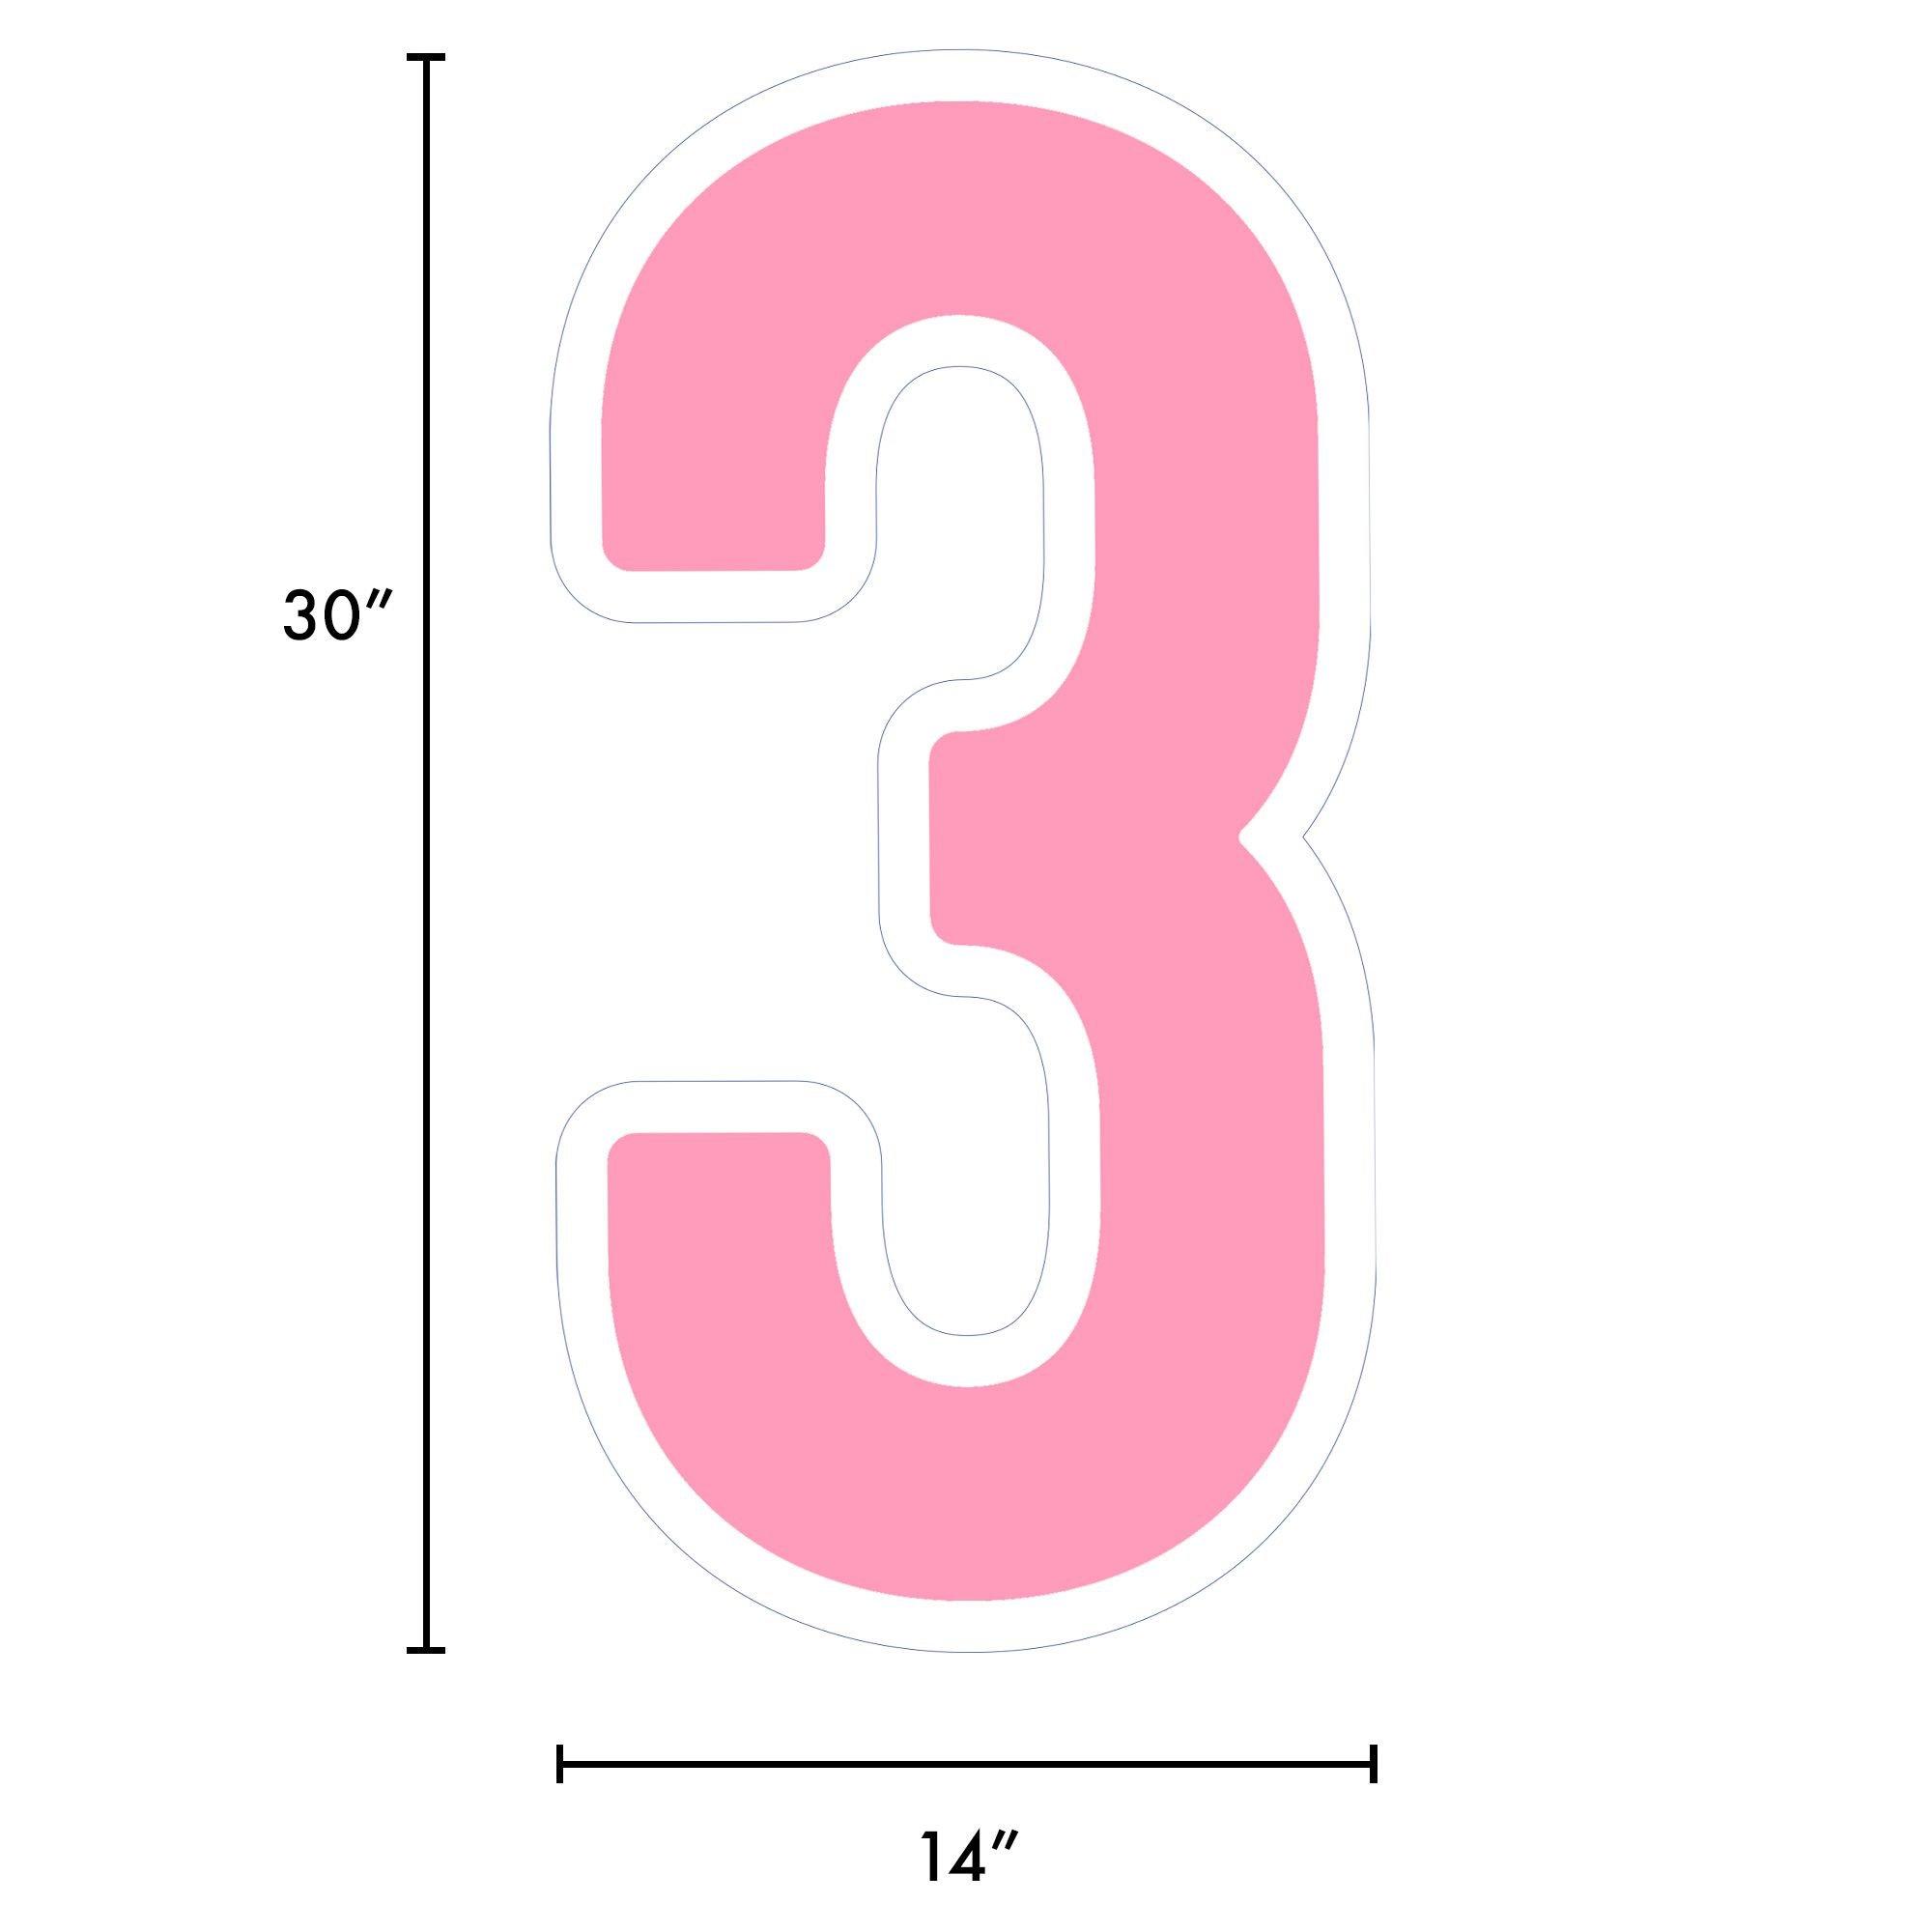 number 14 pink